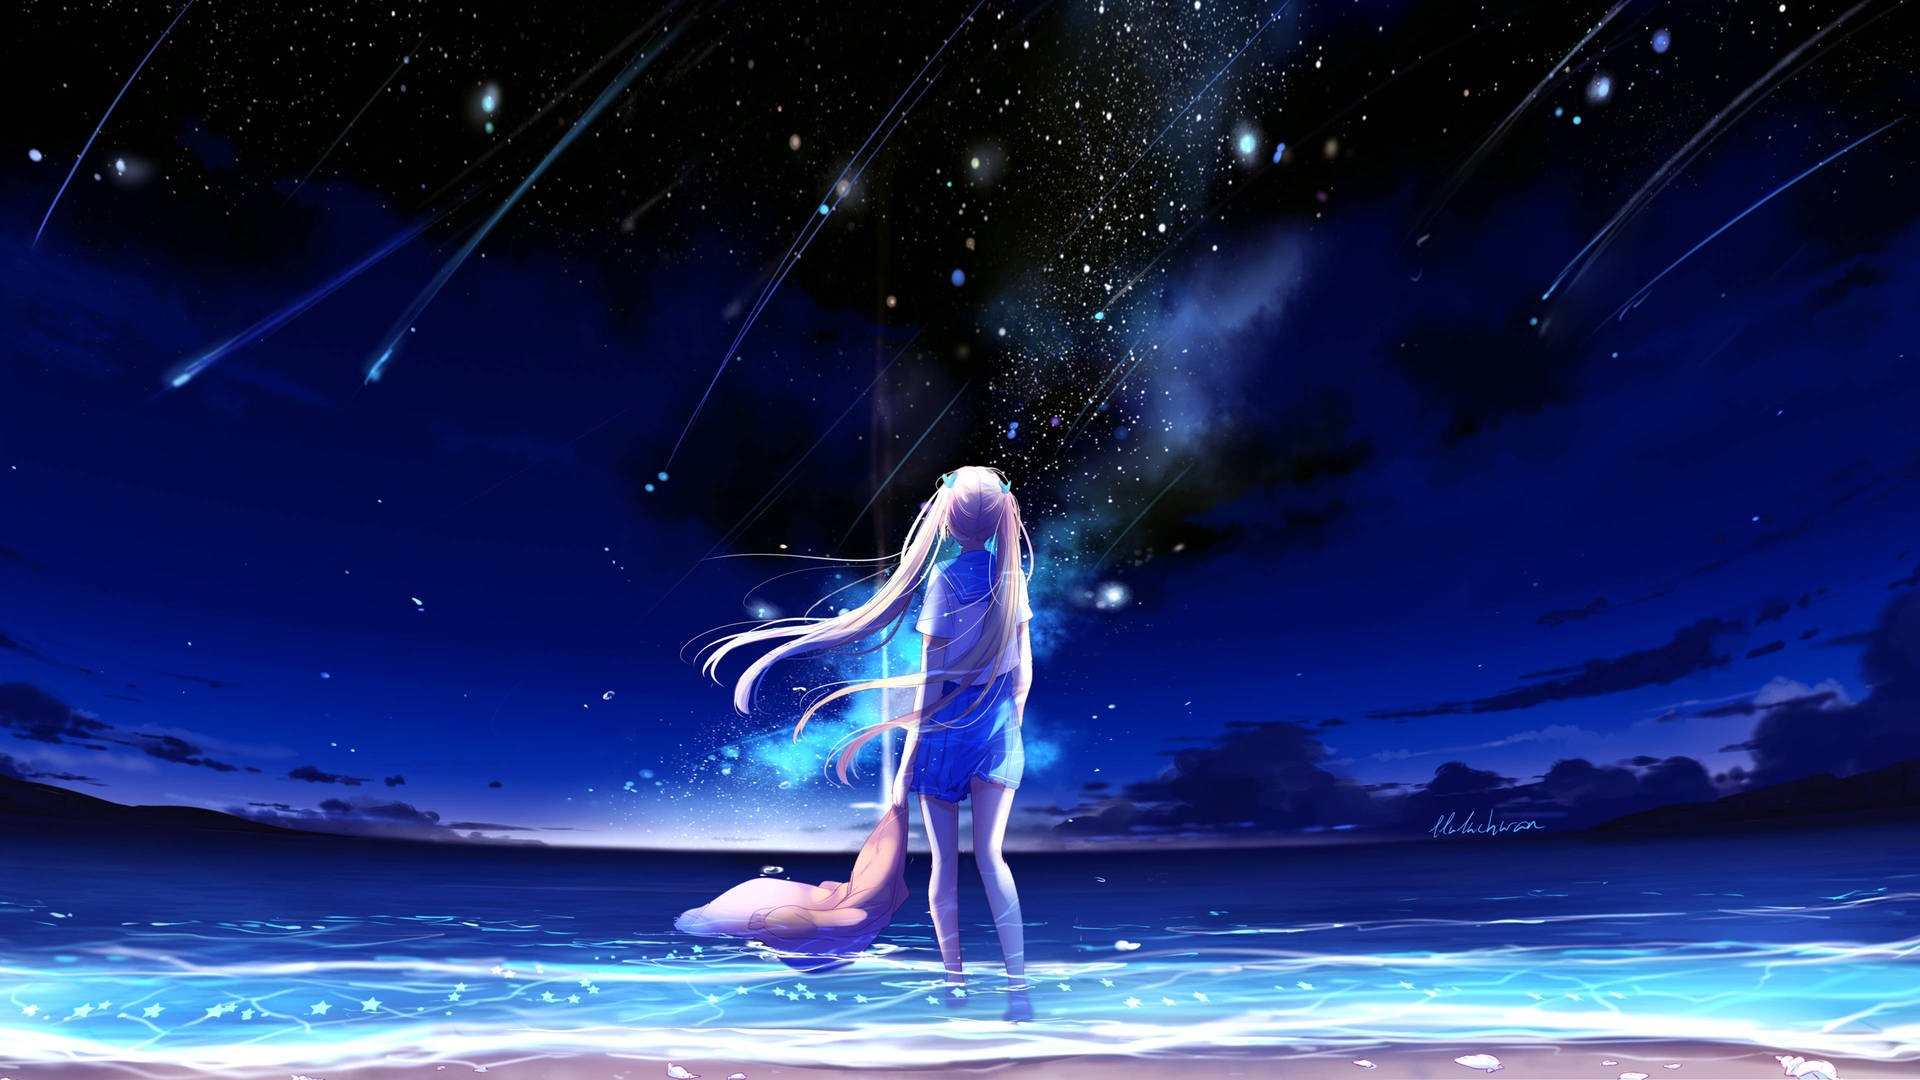 Animation Anime Girl Shooting Stars At Beach Wallpaper